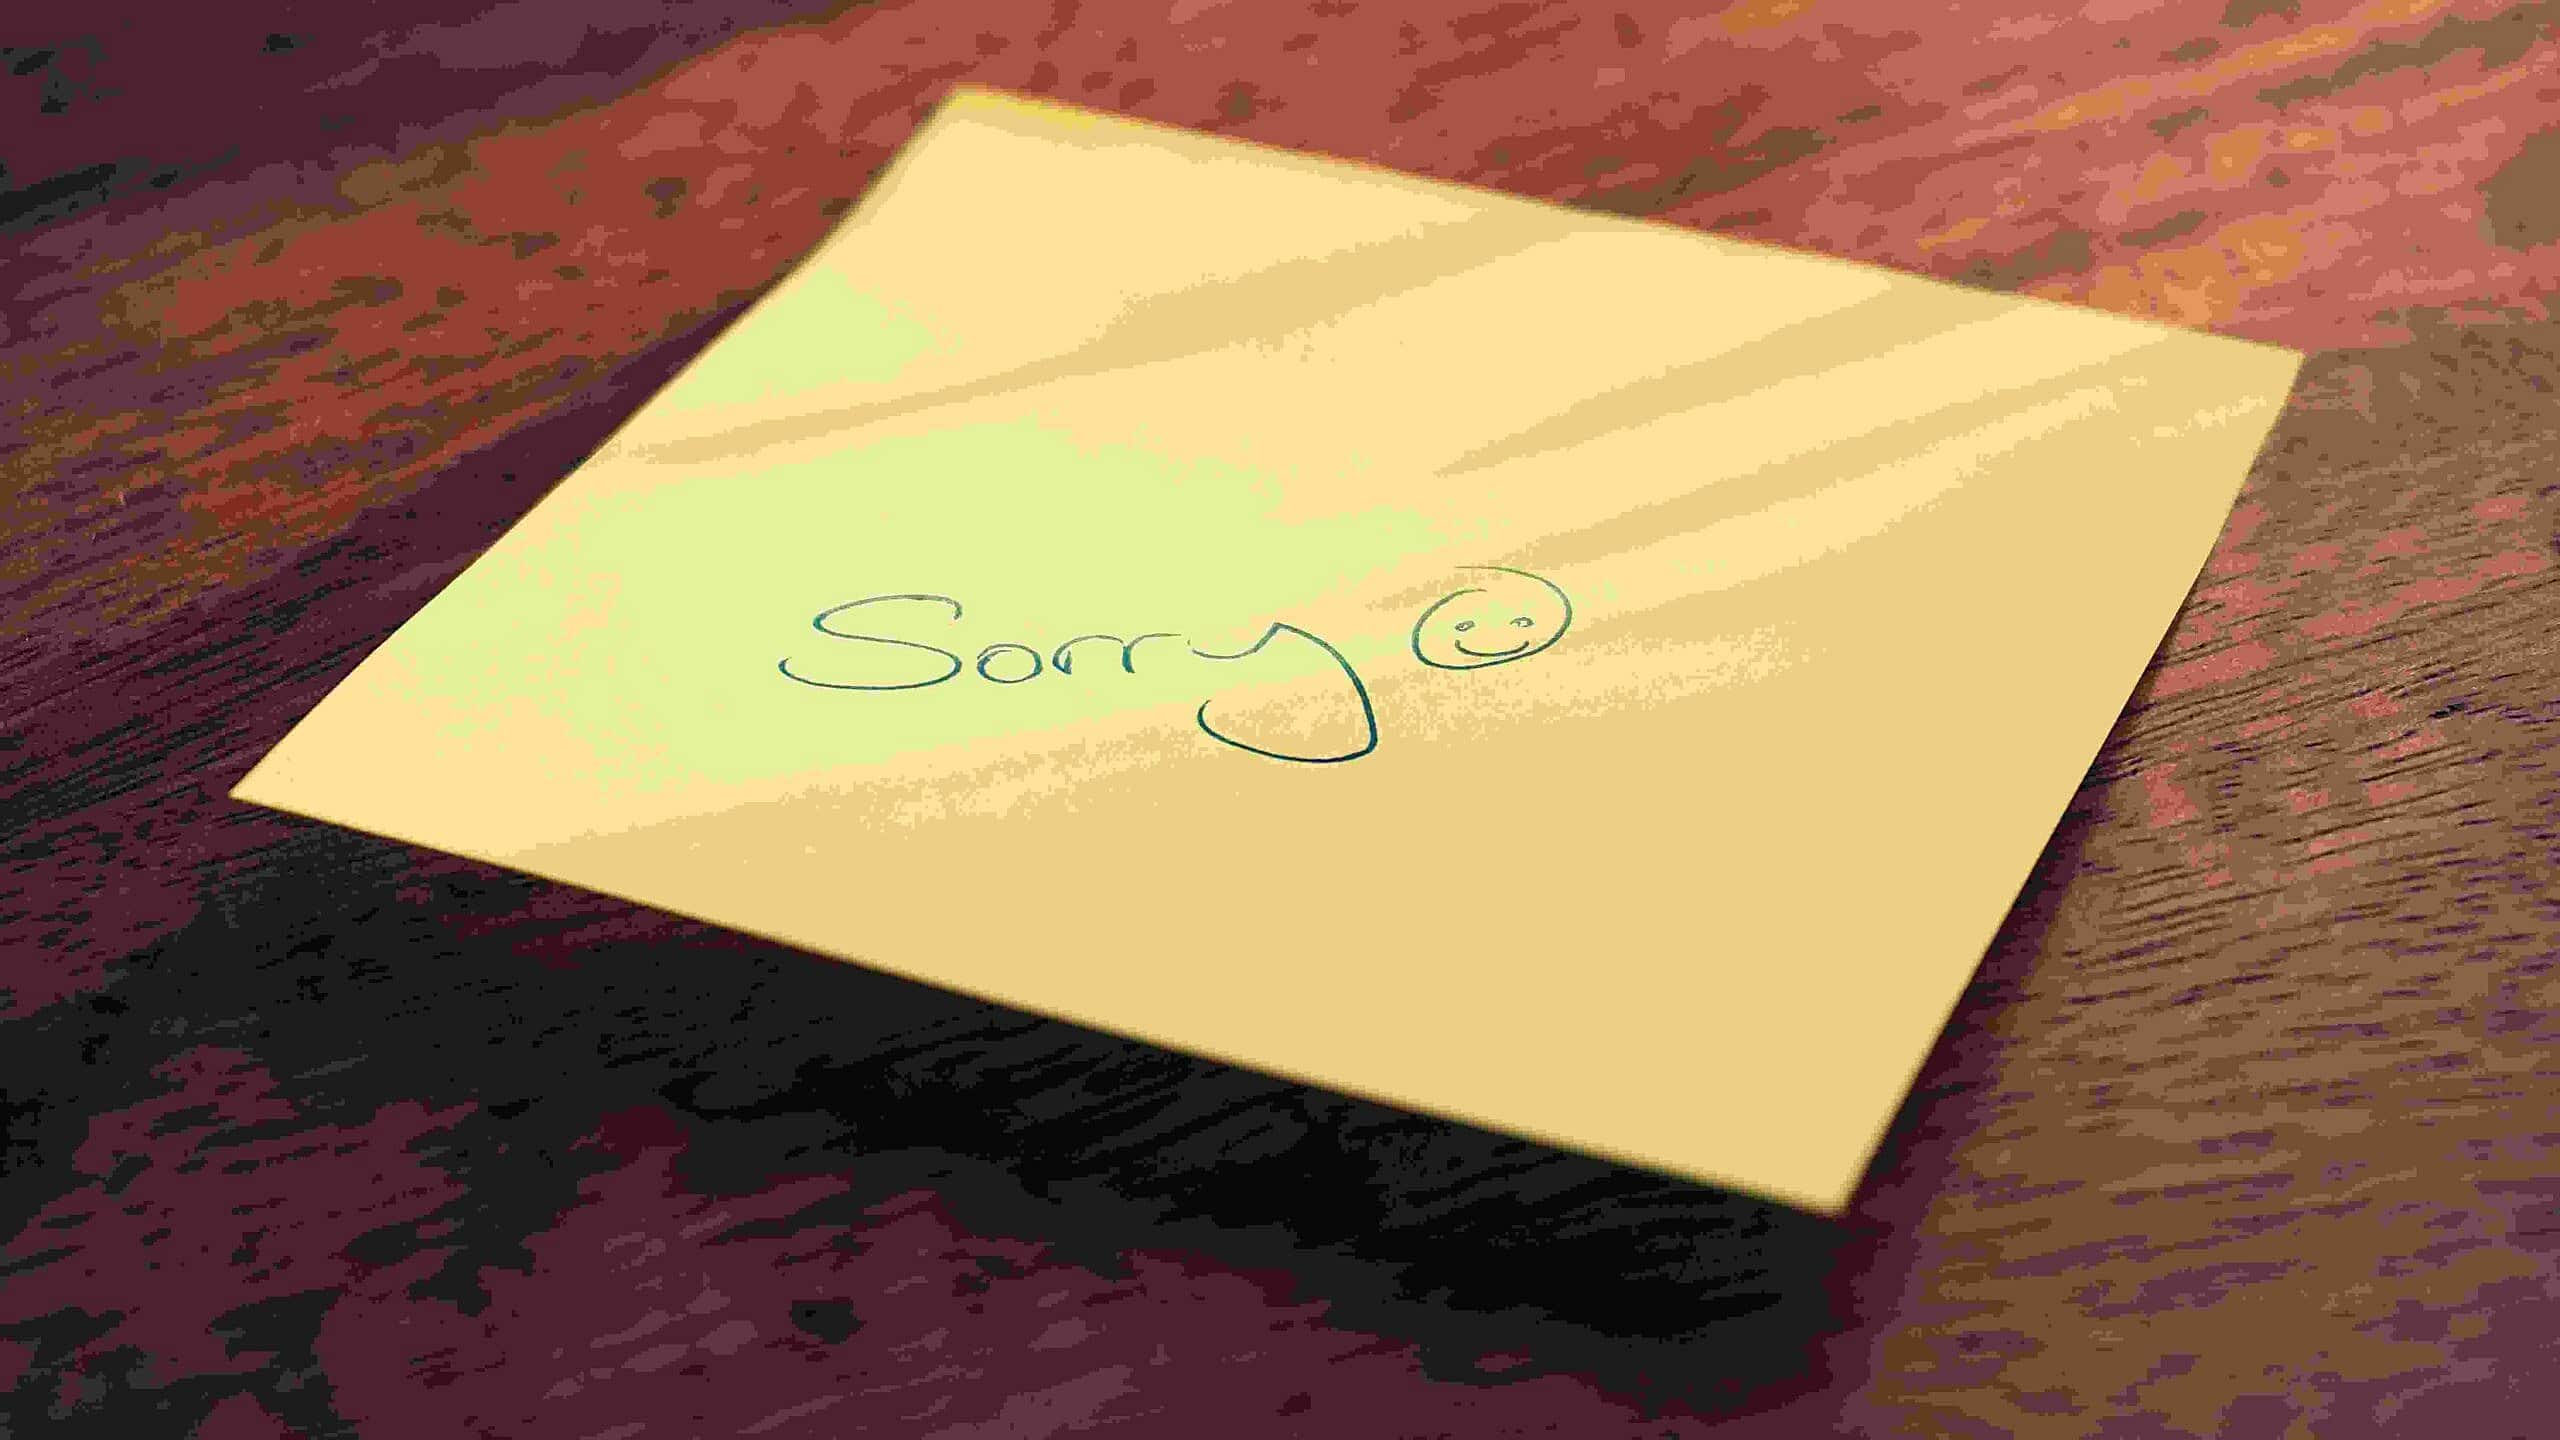 Make apology